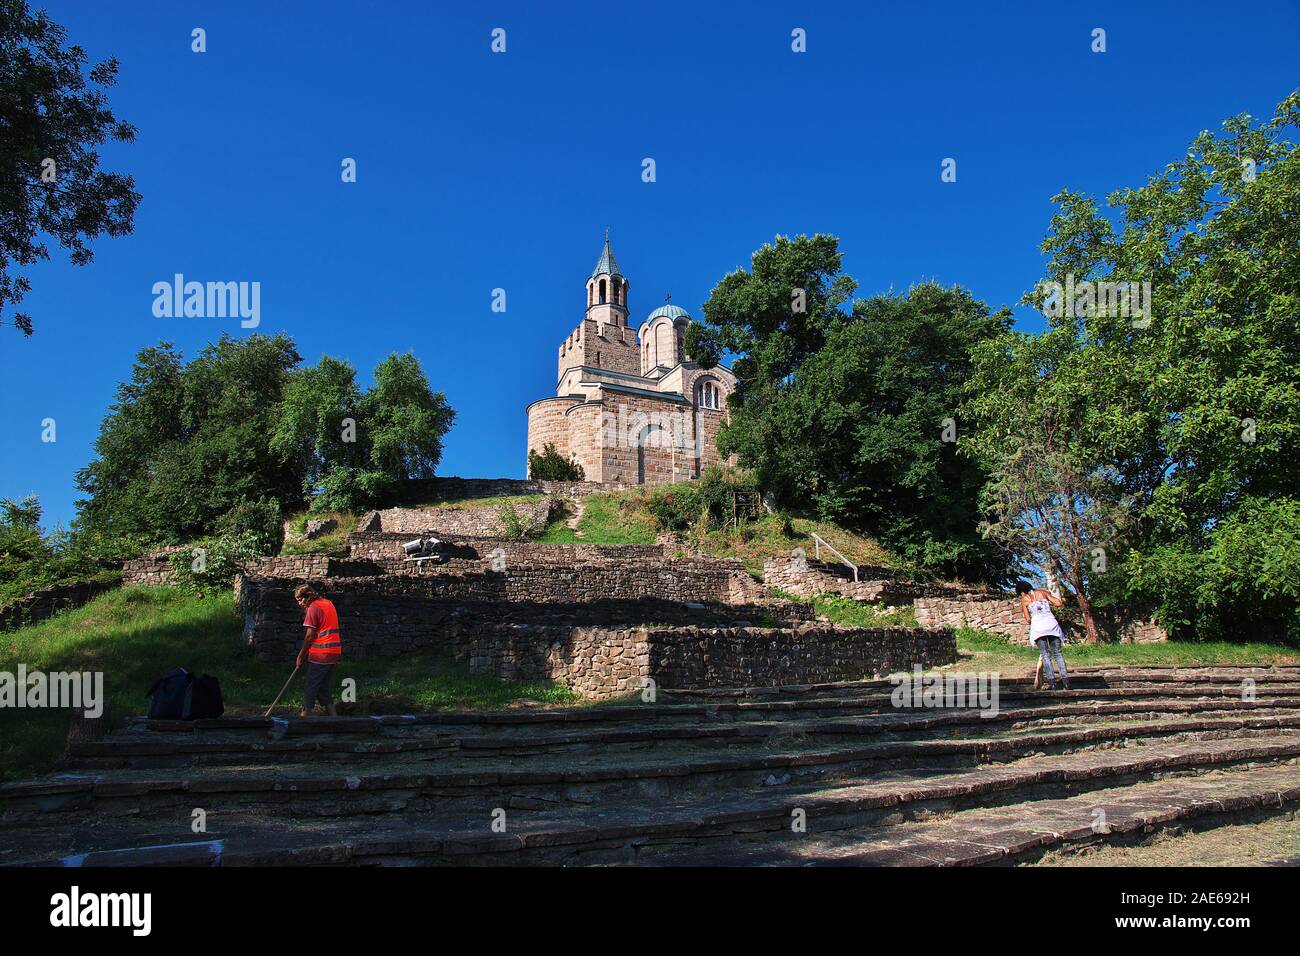 Veliko Tarnovo / Bulgaria - 16 LUG 2015: La chiesa nella fortezza di Veliko Tarnovo, Bulgaria Foto Stock